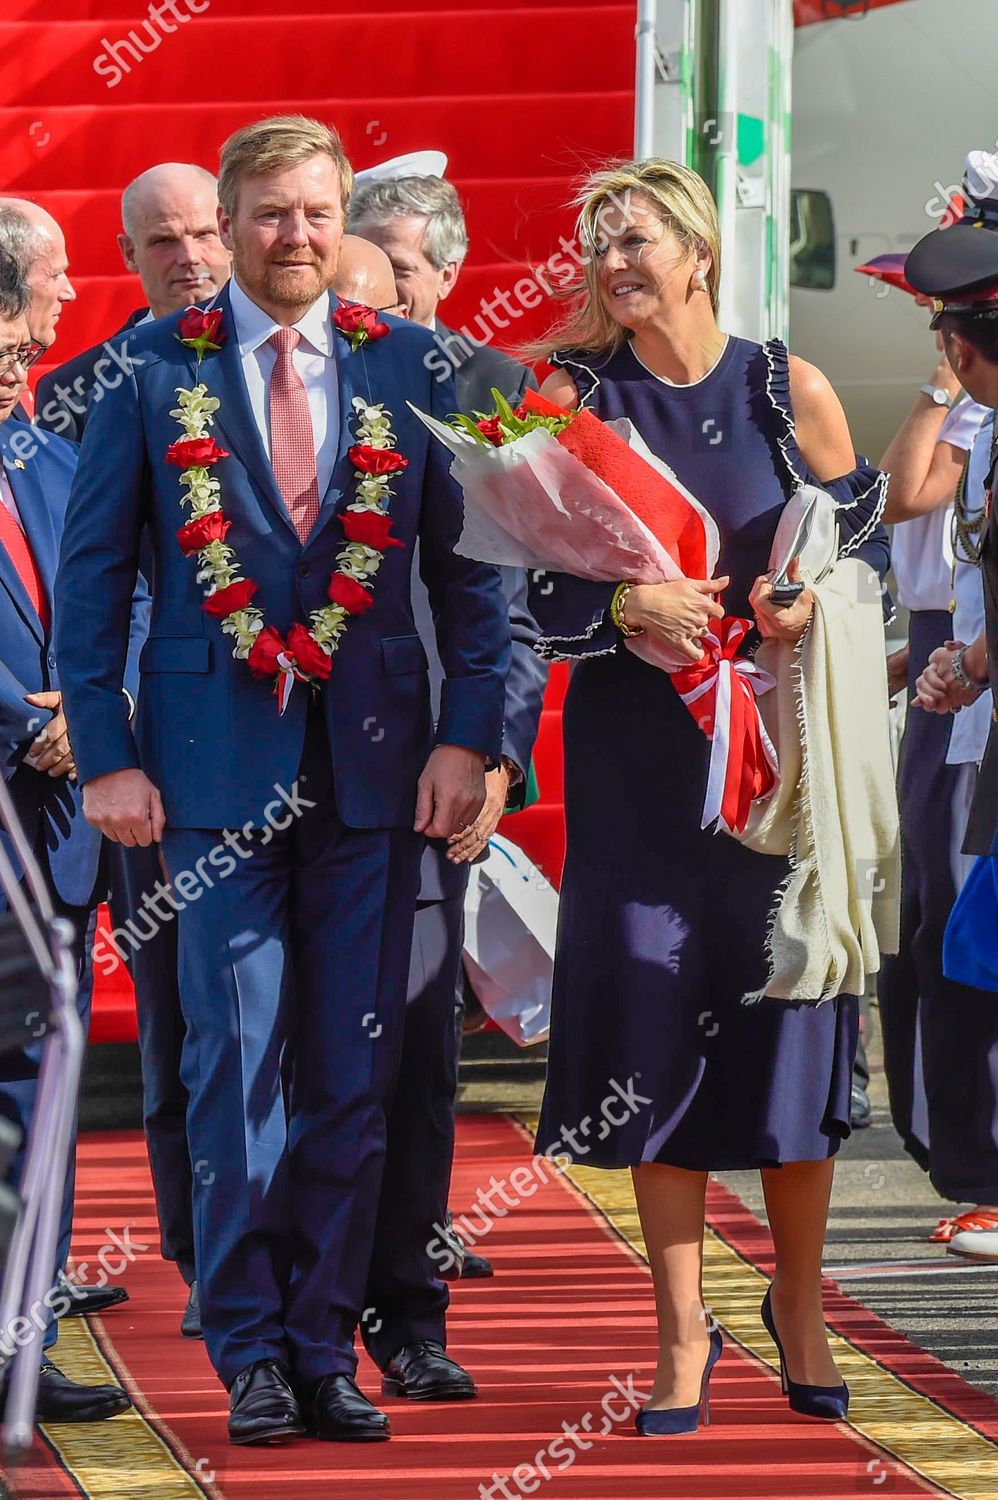 dutch-royals-visit-to-indonesia-shutterstock-editorial-10577696d.jpg